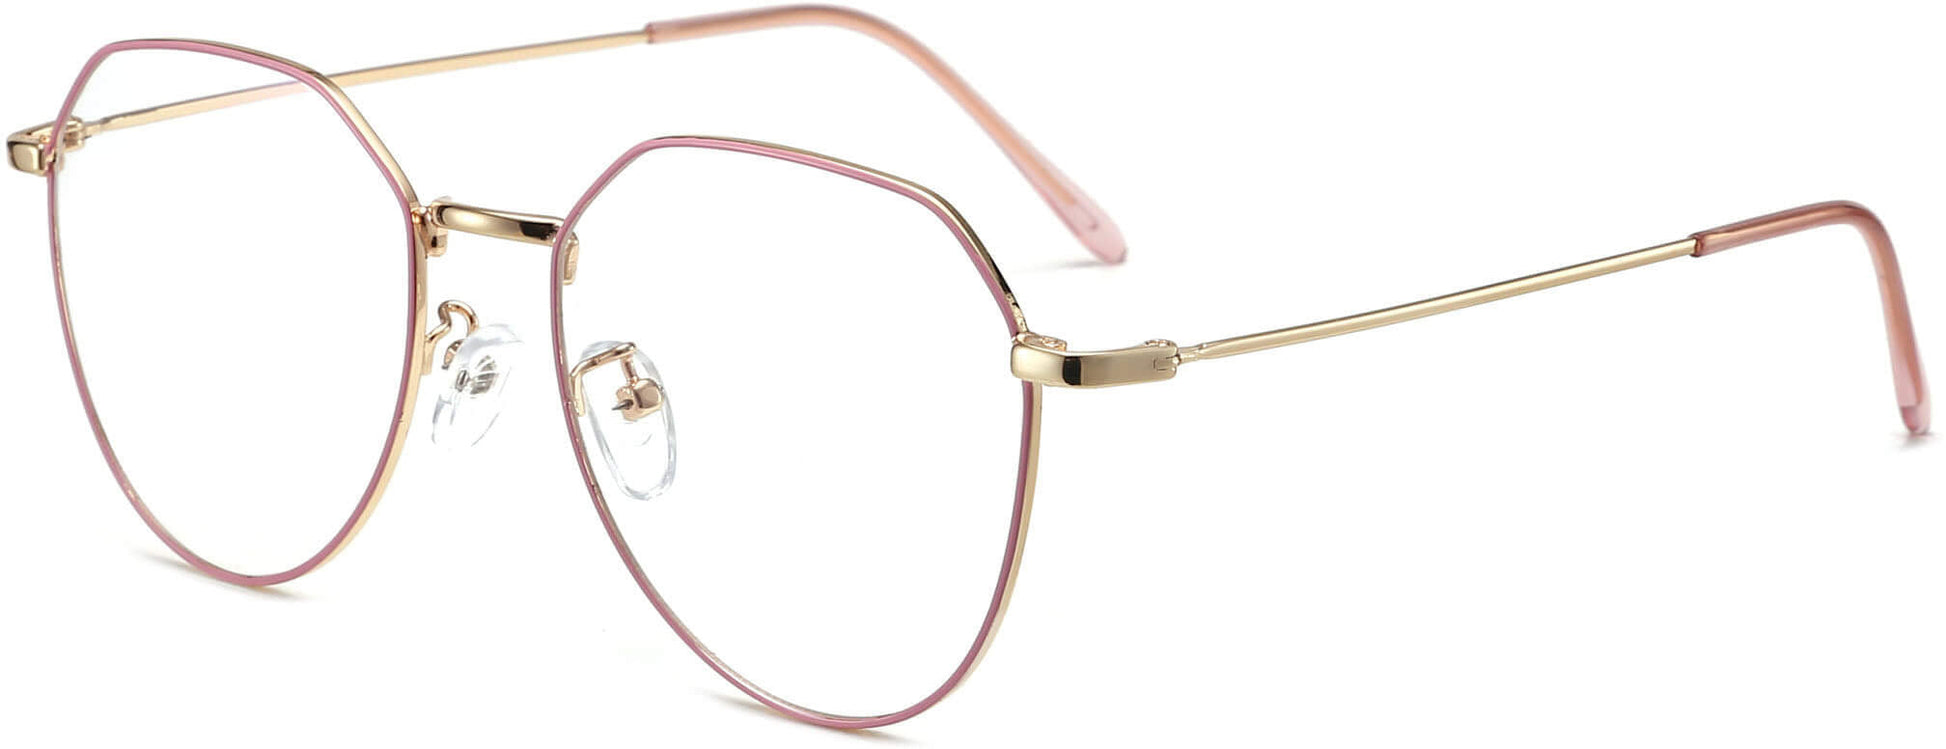 Sana Pink Metal Eyeglasses from ANRRI, Angle View